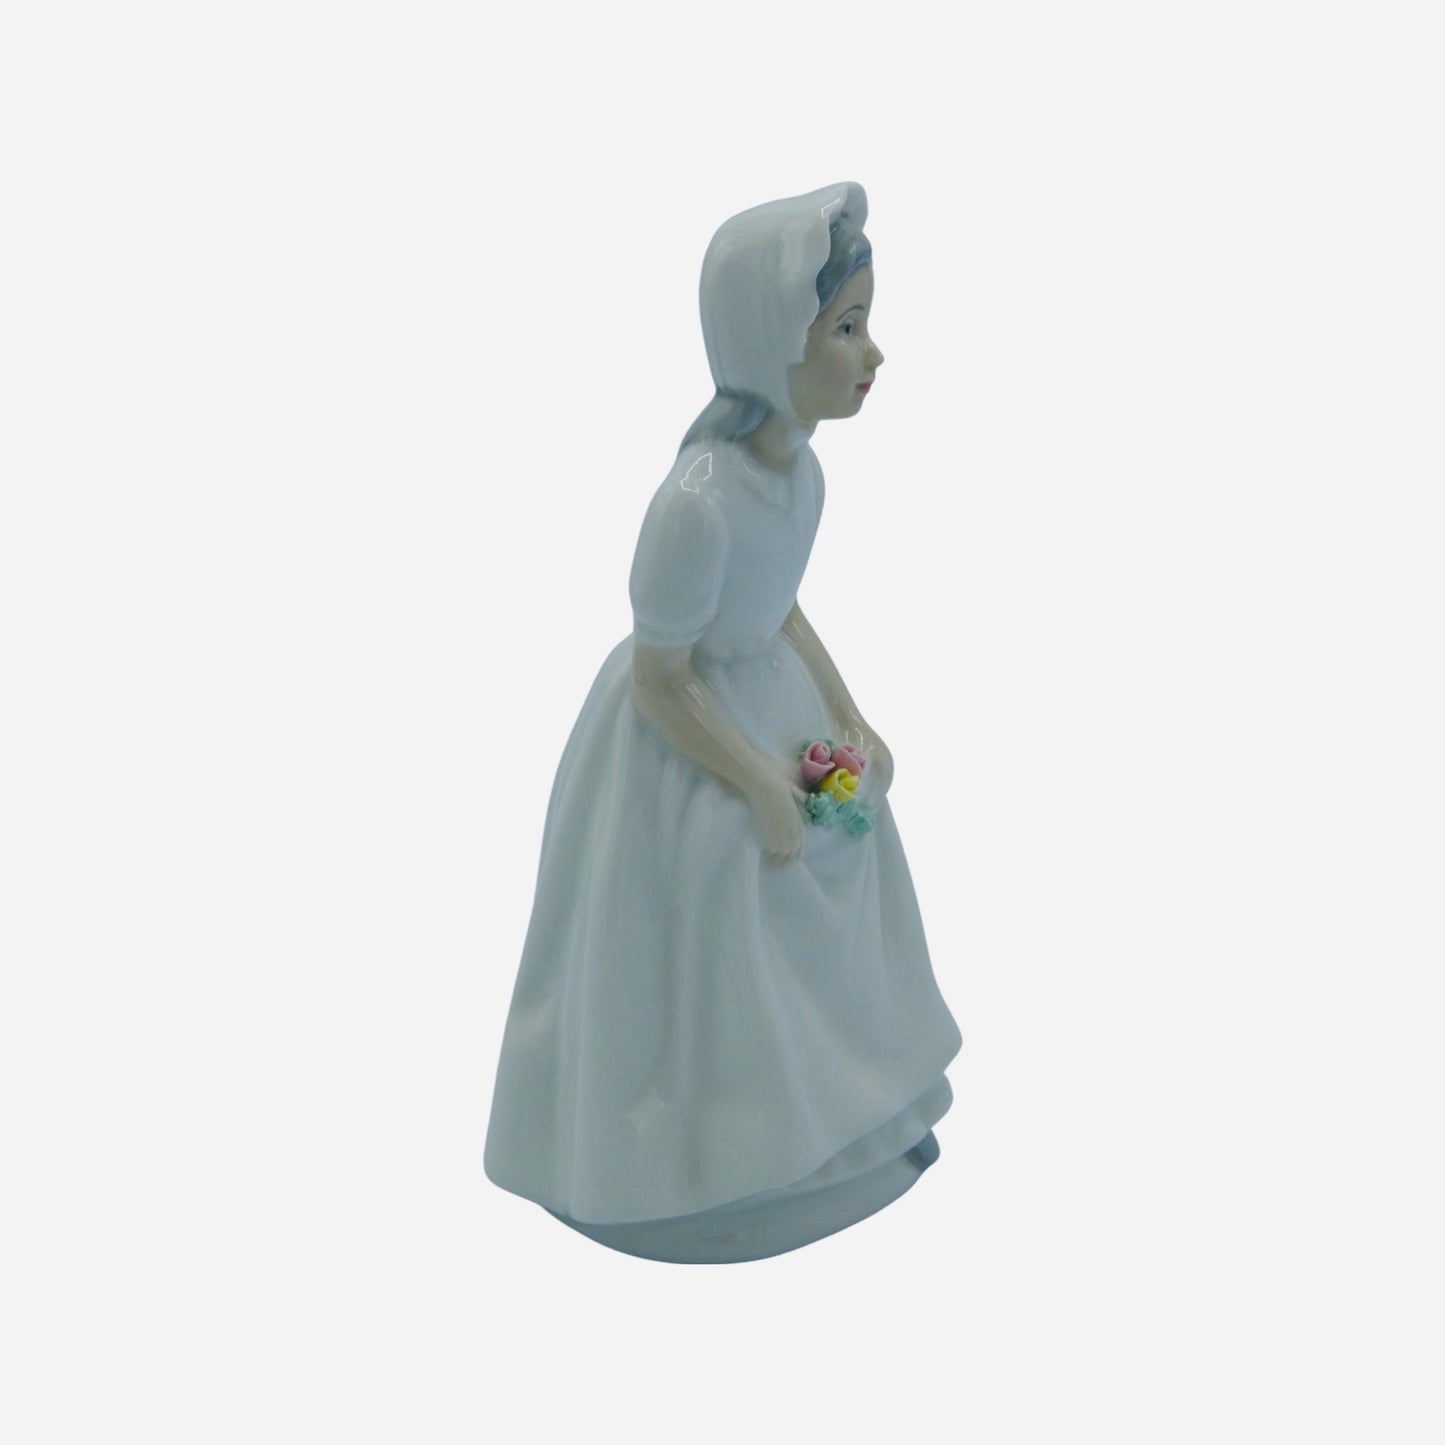 Porceval Spanish Porcelain Girl in a Bonnet with Roses Villamarchante Figurine